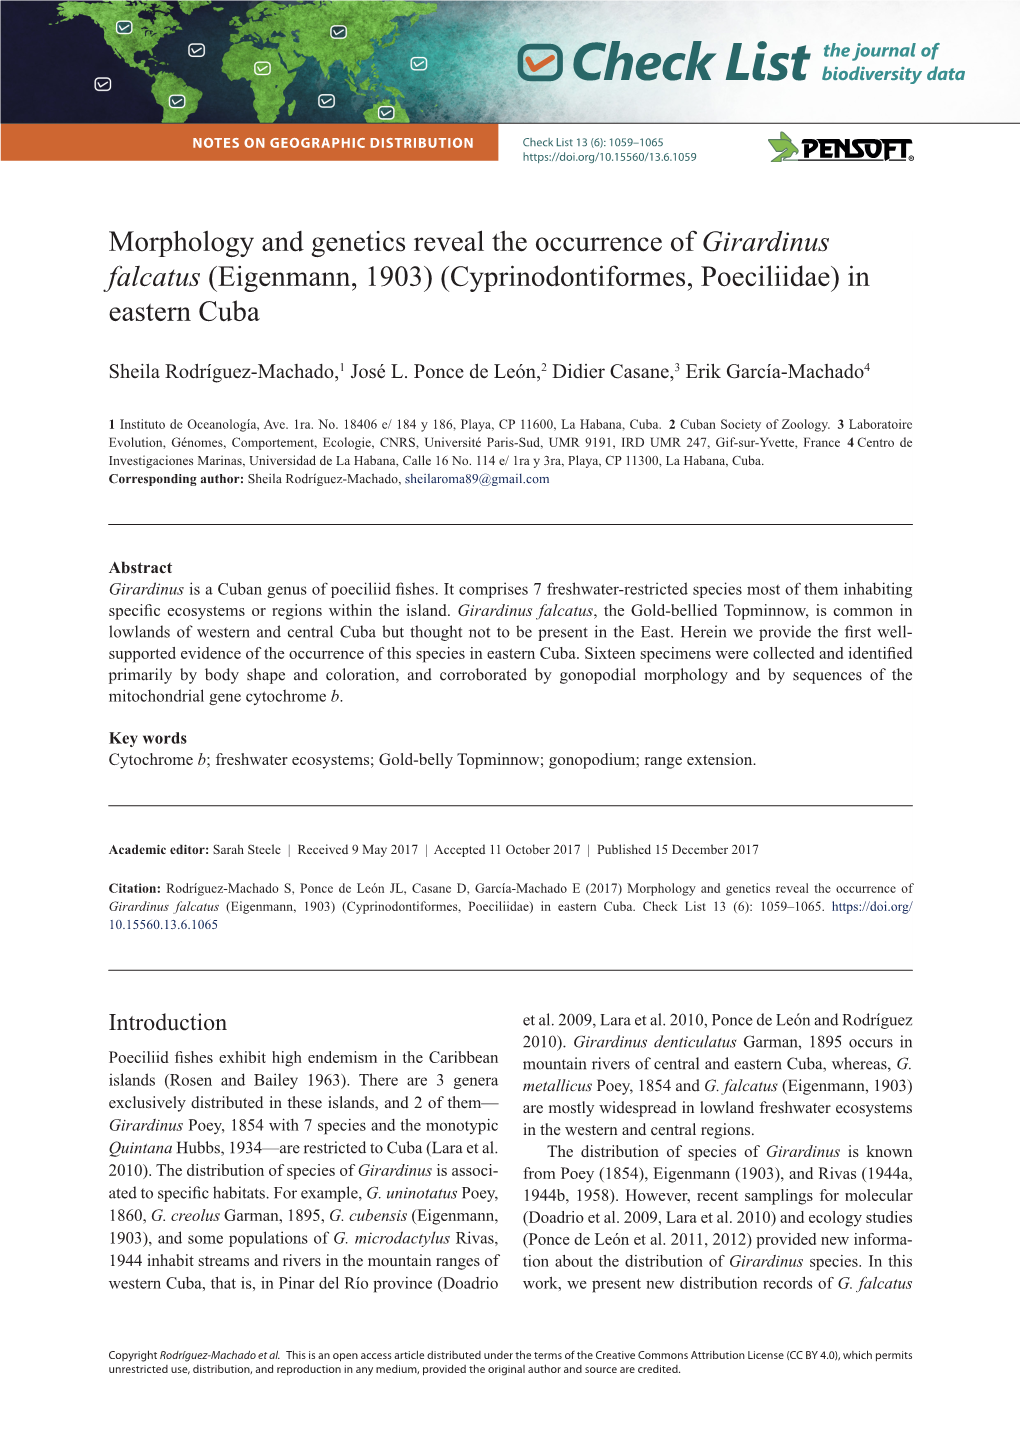 Morphology and Genetics Reveal the Occurrence of Girardinus Falcatus (Eigenmann, 1903) (Cyprinodontiformes, Poeciliidae) in Eastern Cuba